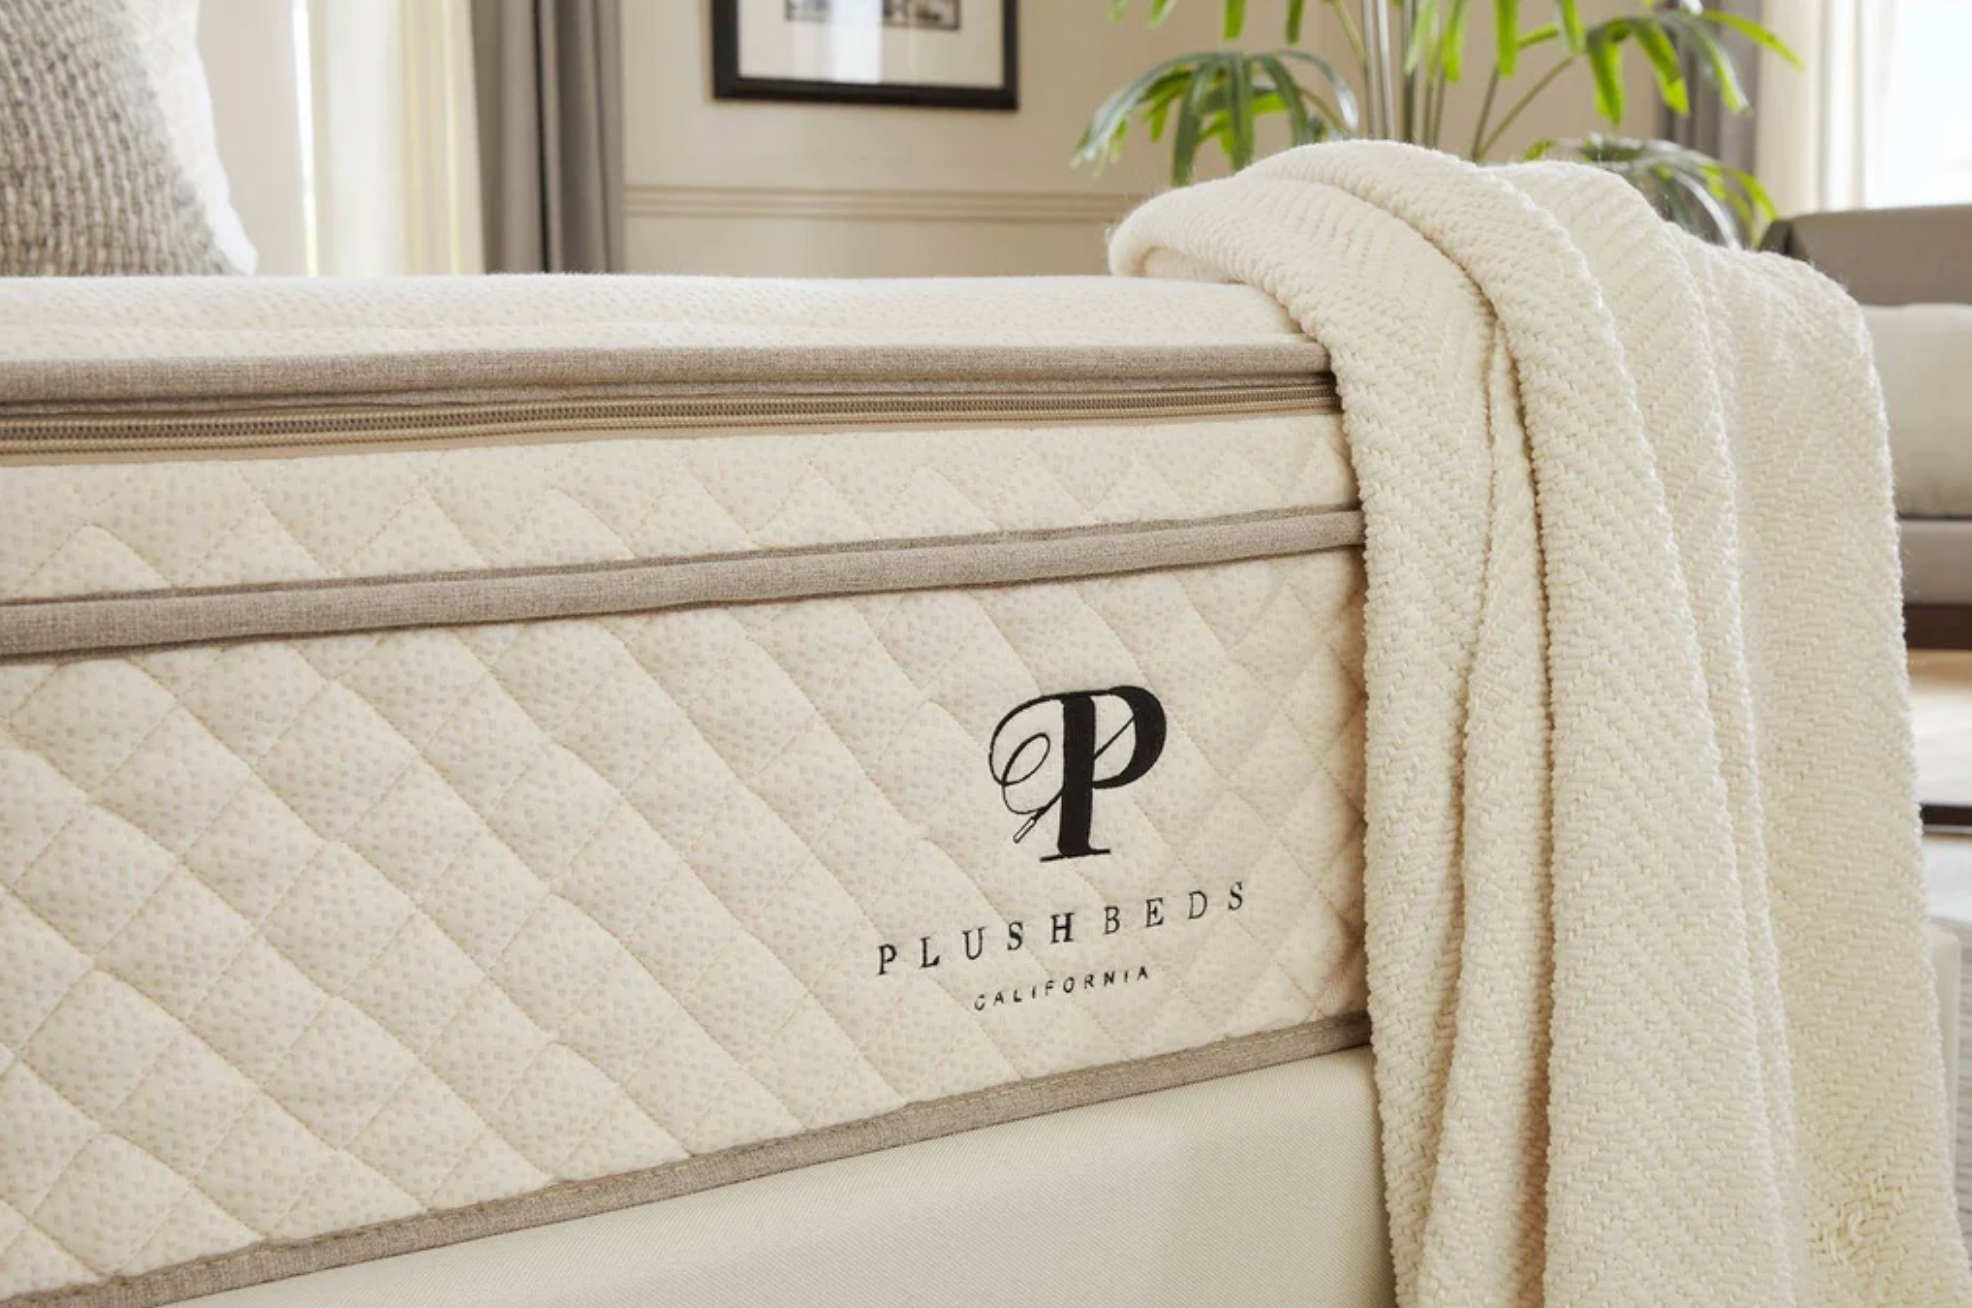 plushbeds latex mattress close up image